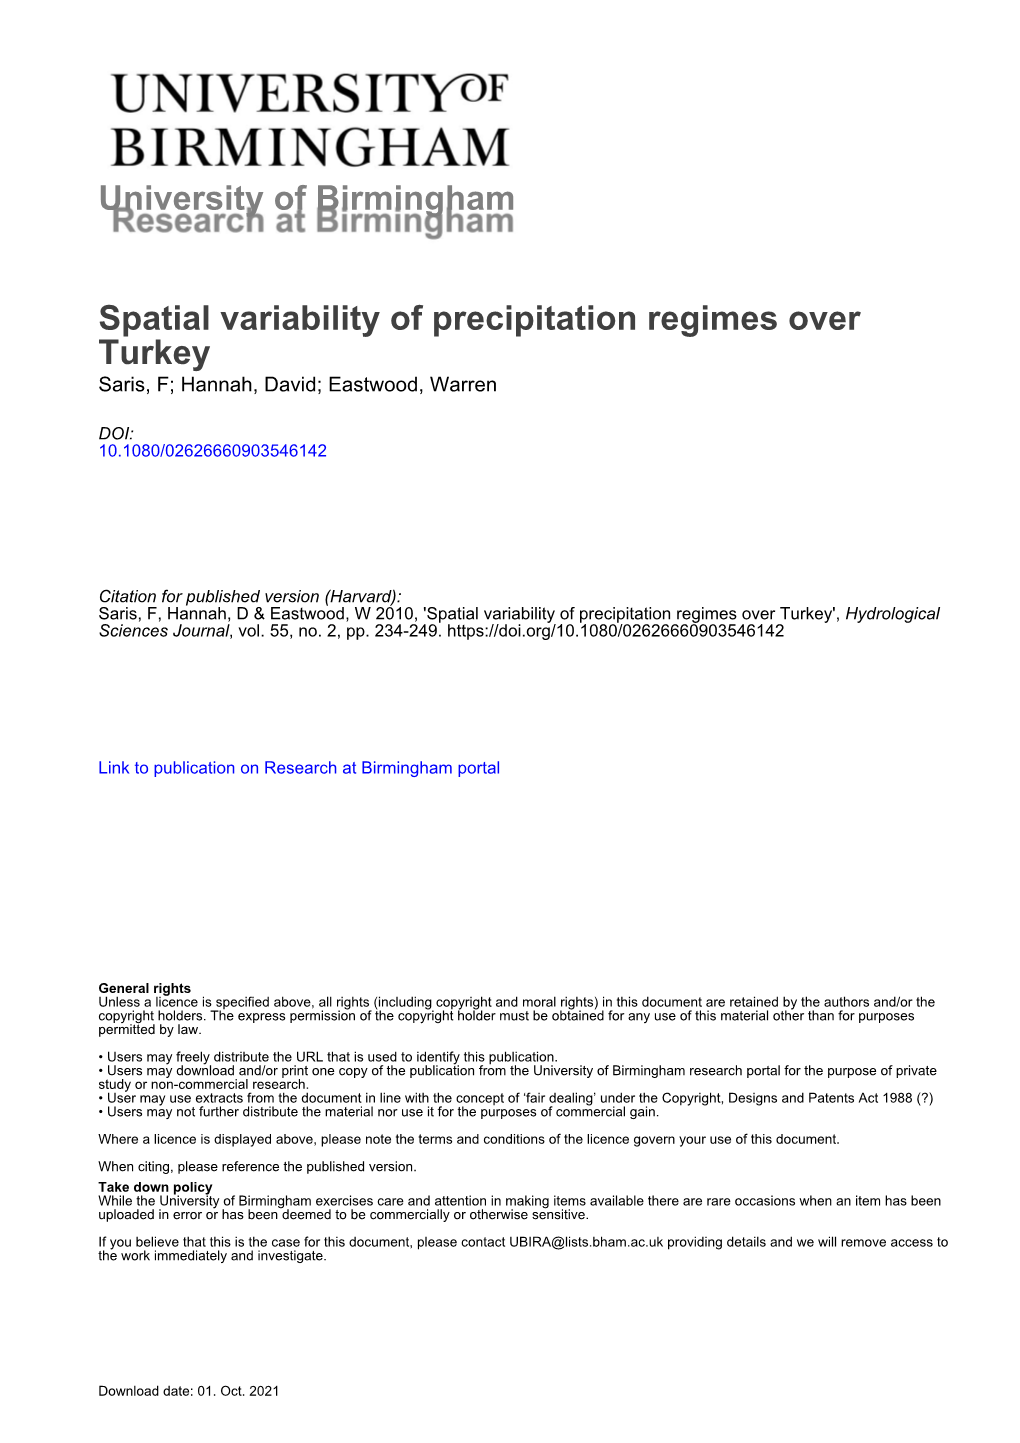 University of Birmingham Spatial Variability of Precipitation